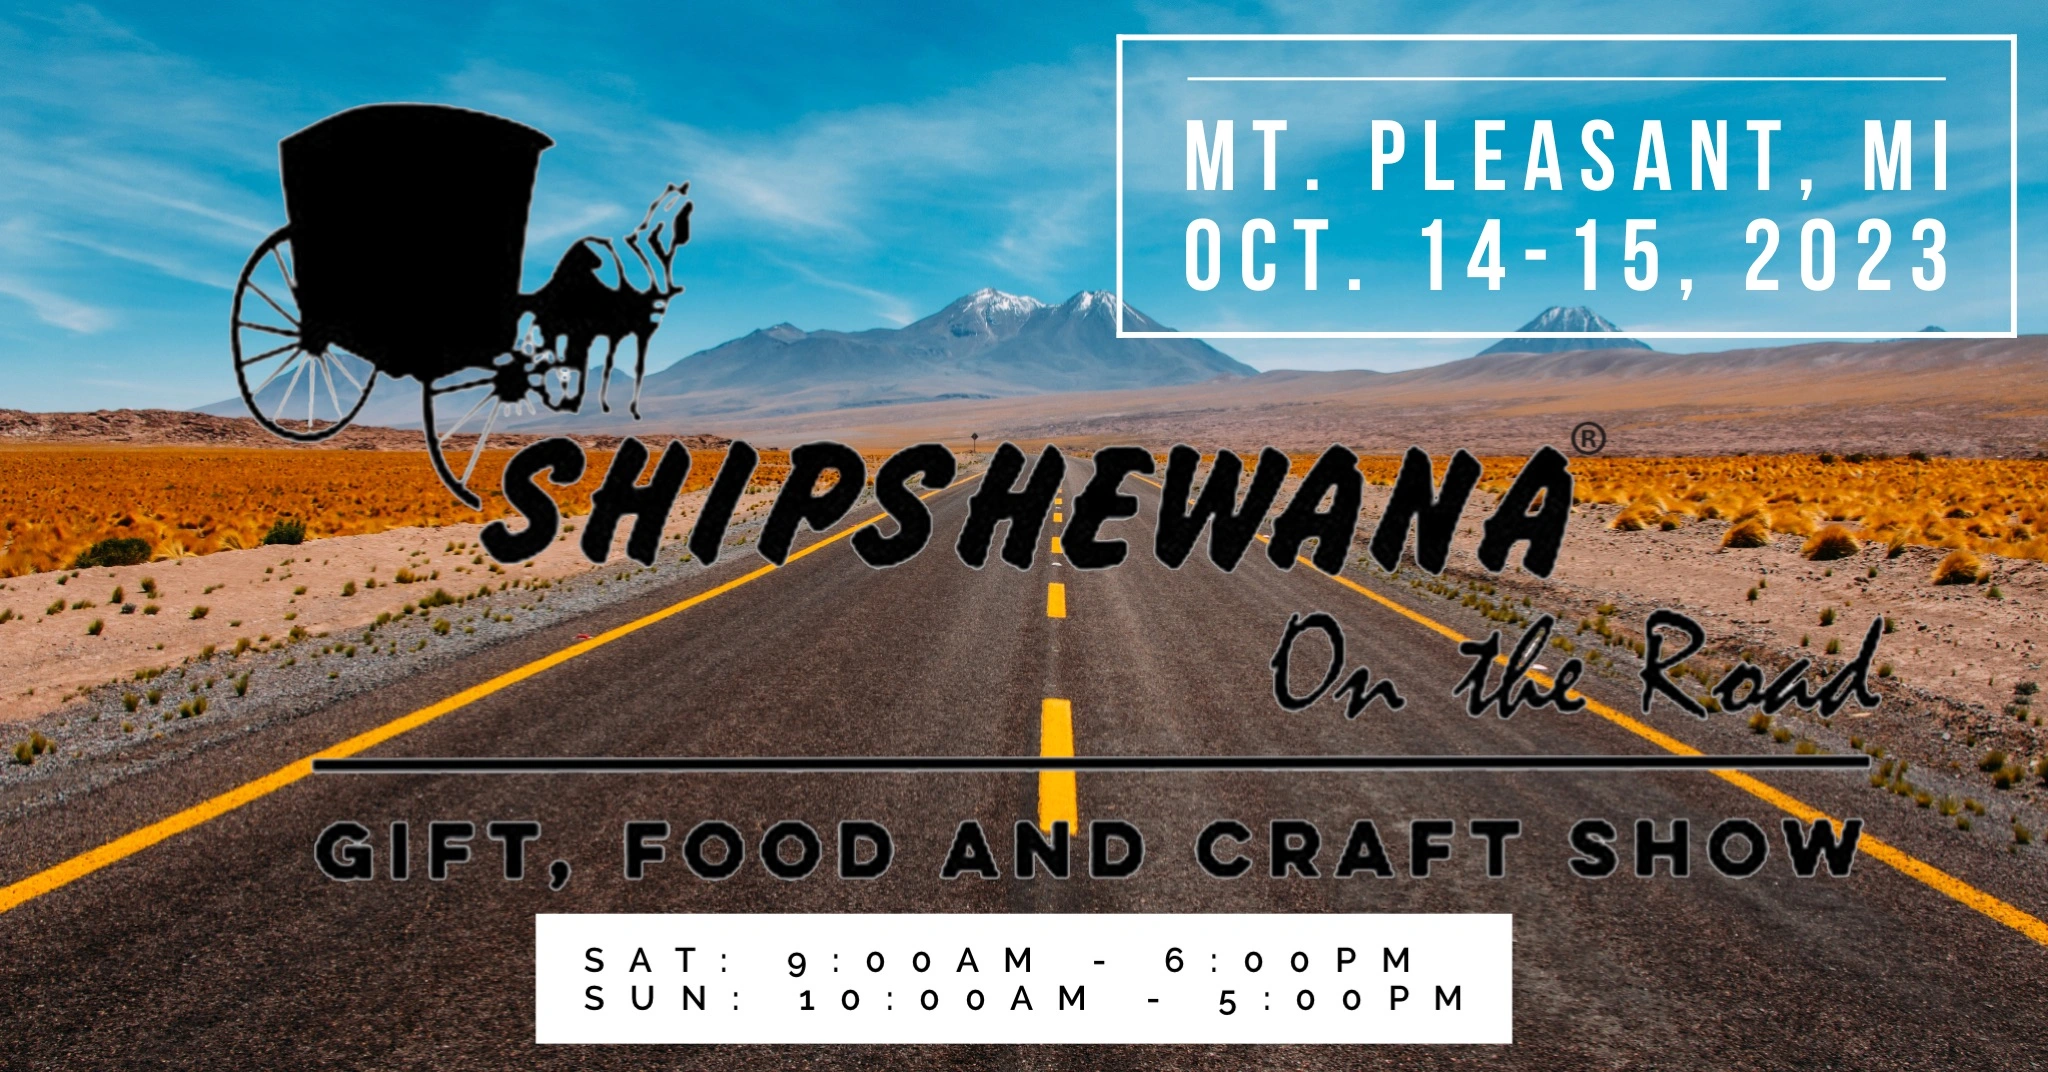 Shipshewana on the Road Mt. Pleasant Area Convention & Visitors Bureau